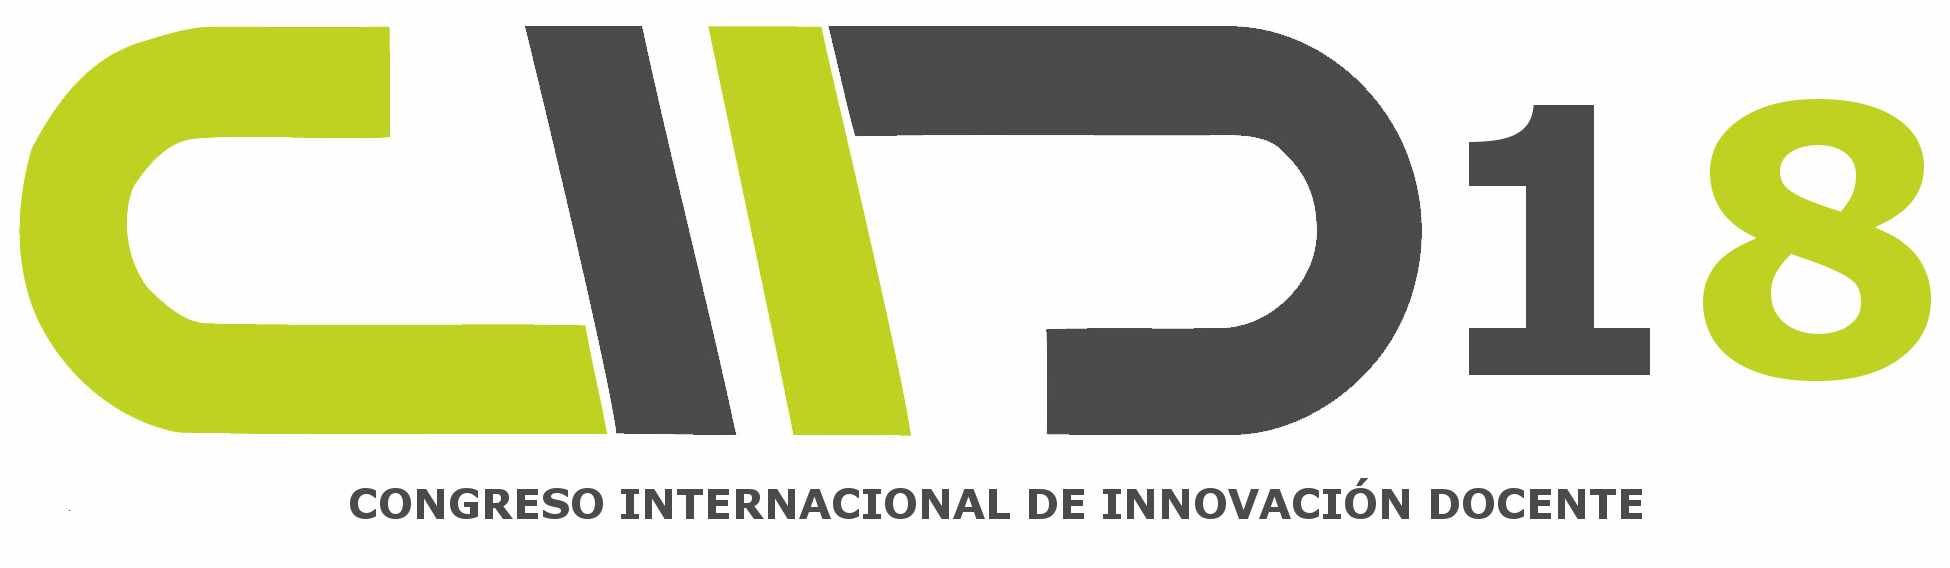 III Congreso Internacional de Innovación Docente